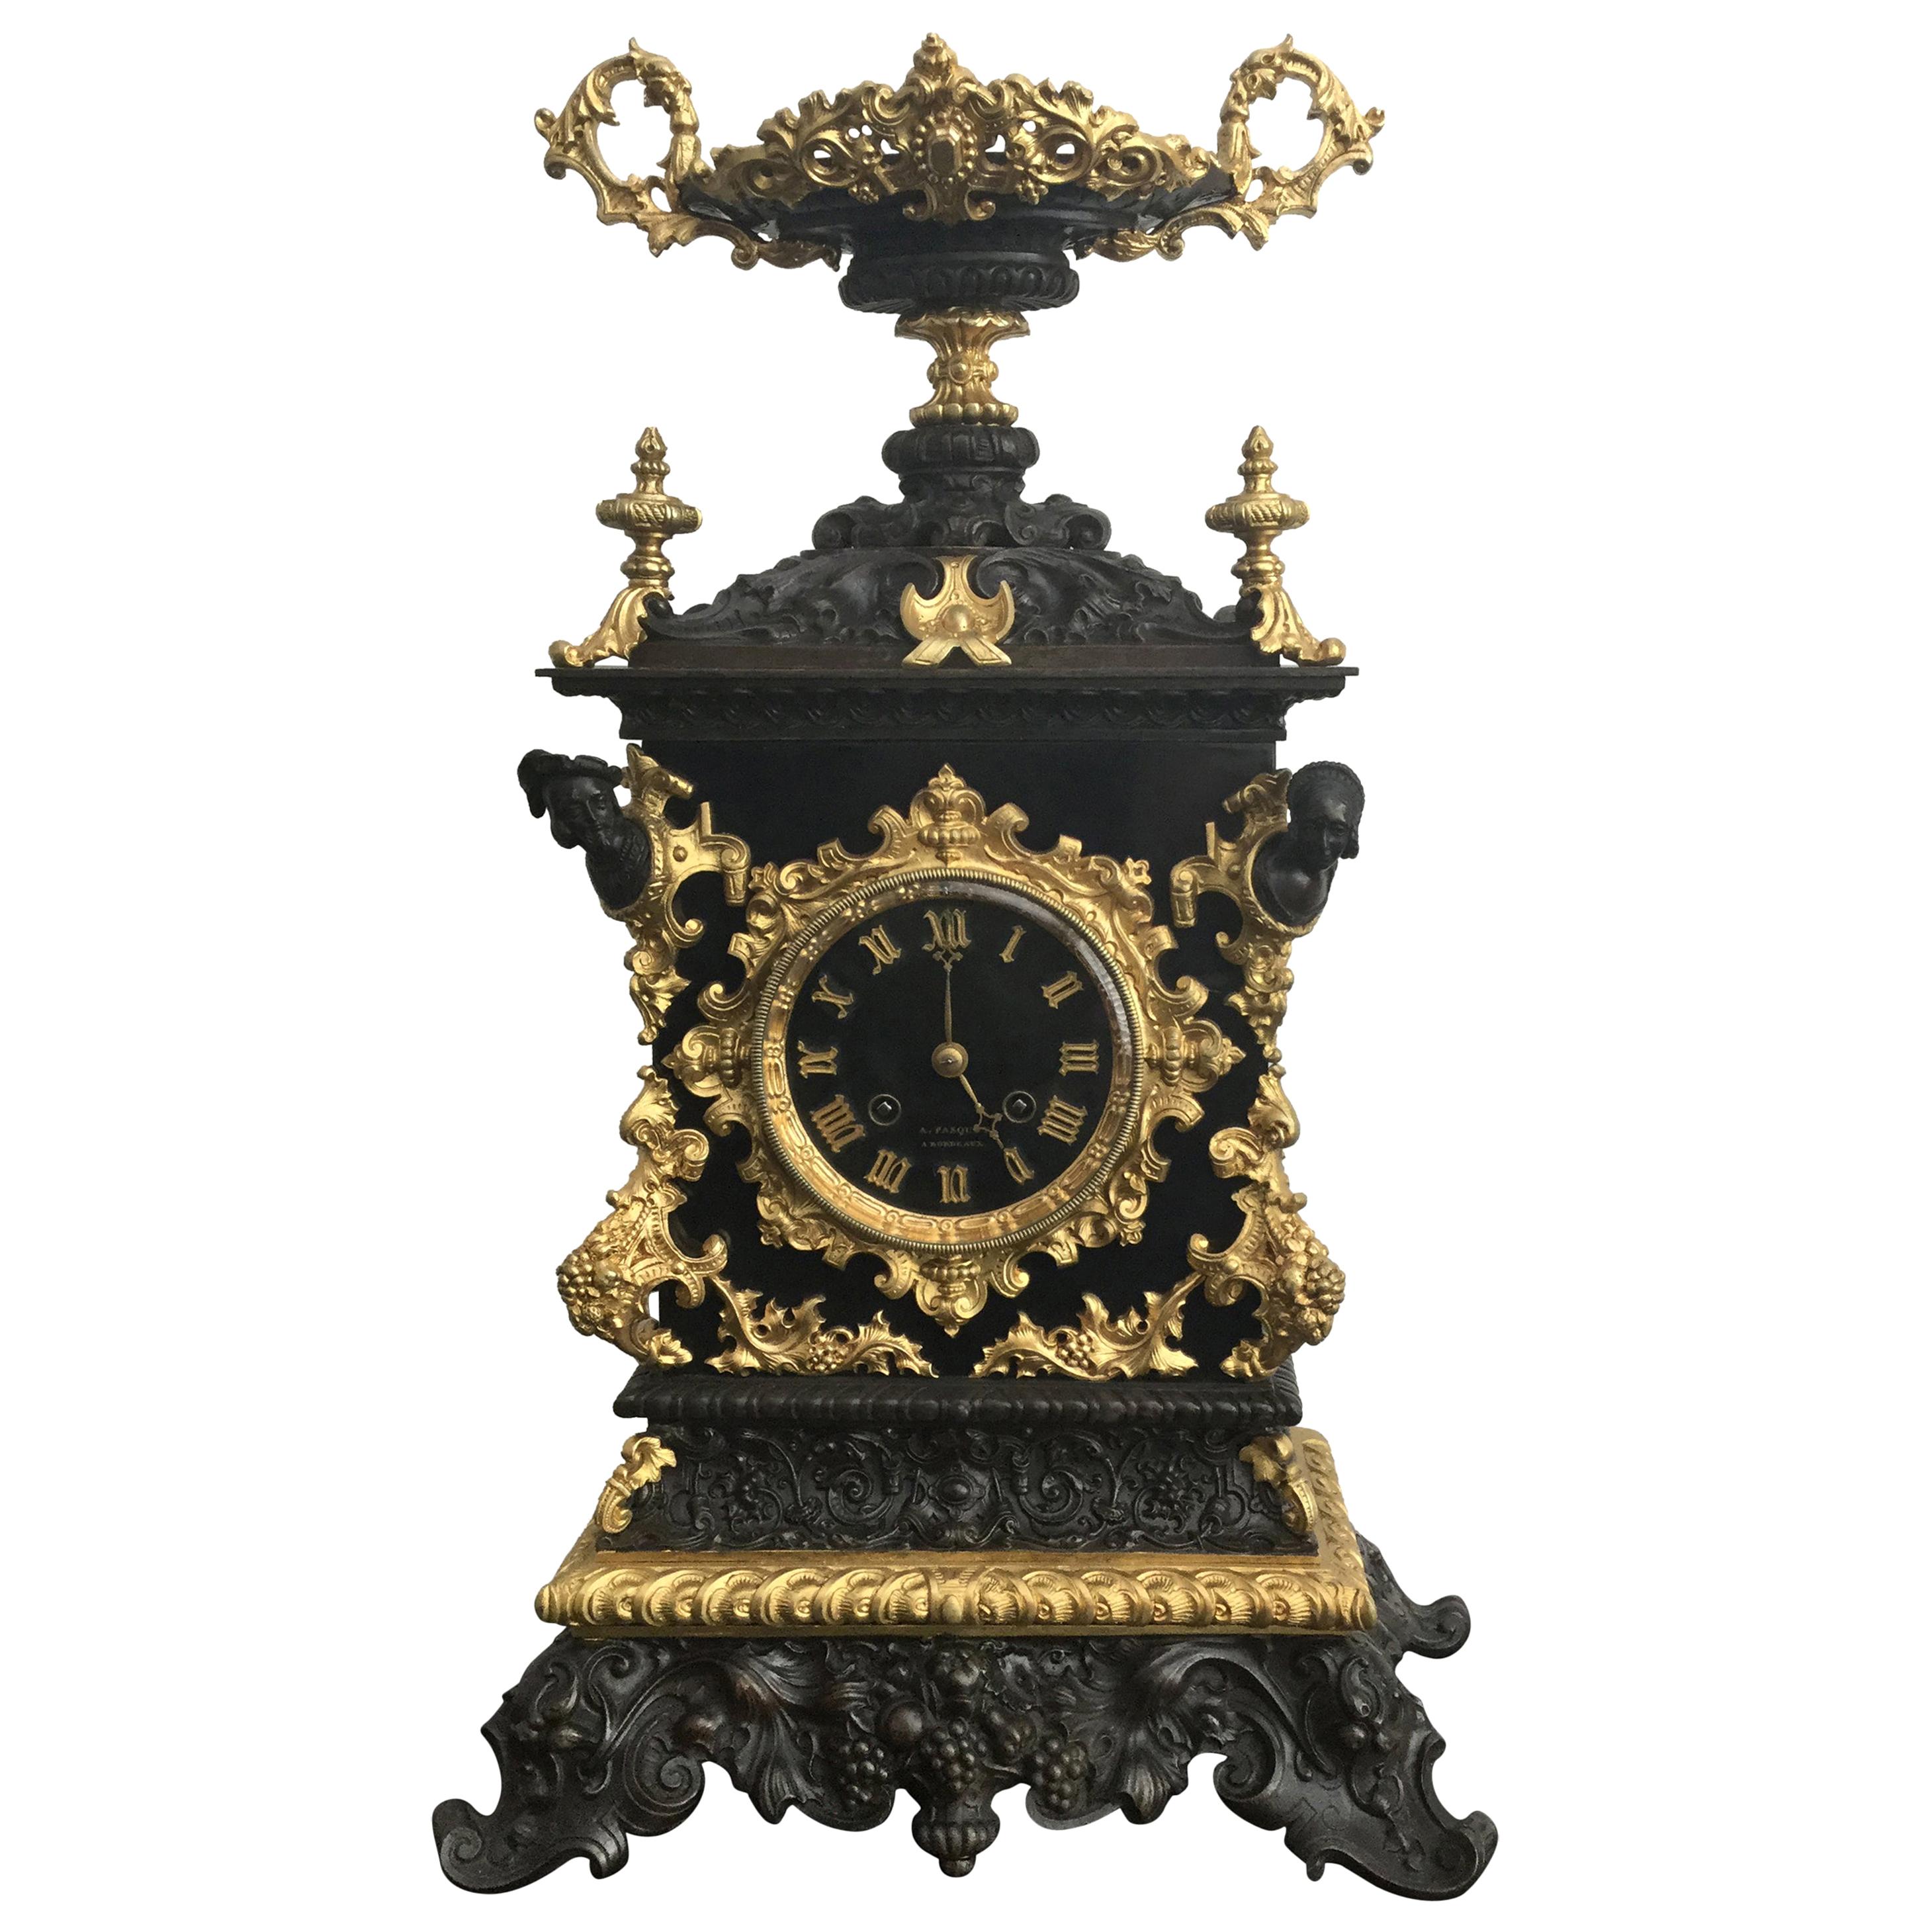 Baroque Style Mantel Clock, Bronze and Black Slate, Bordeaux Maker, 19th Century